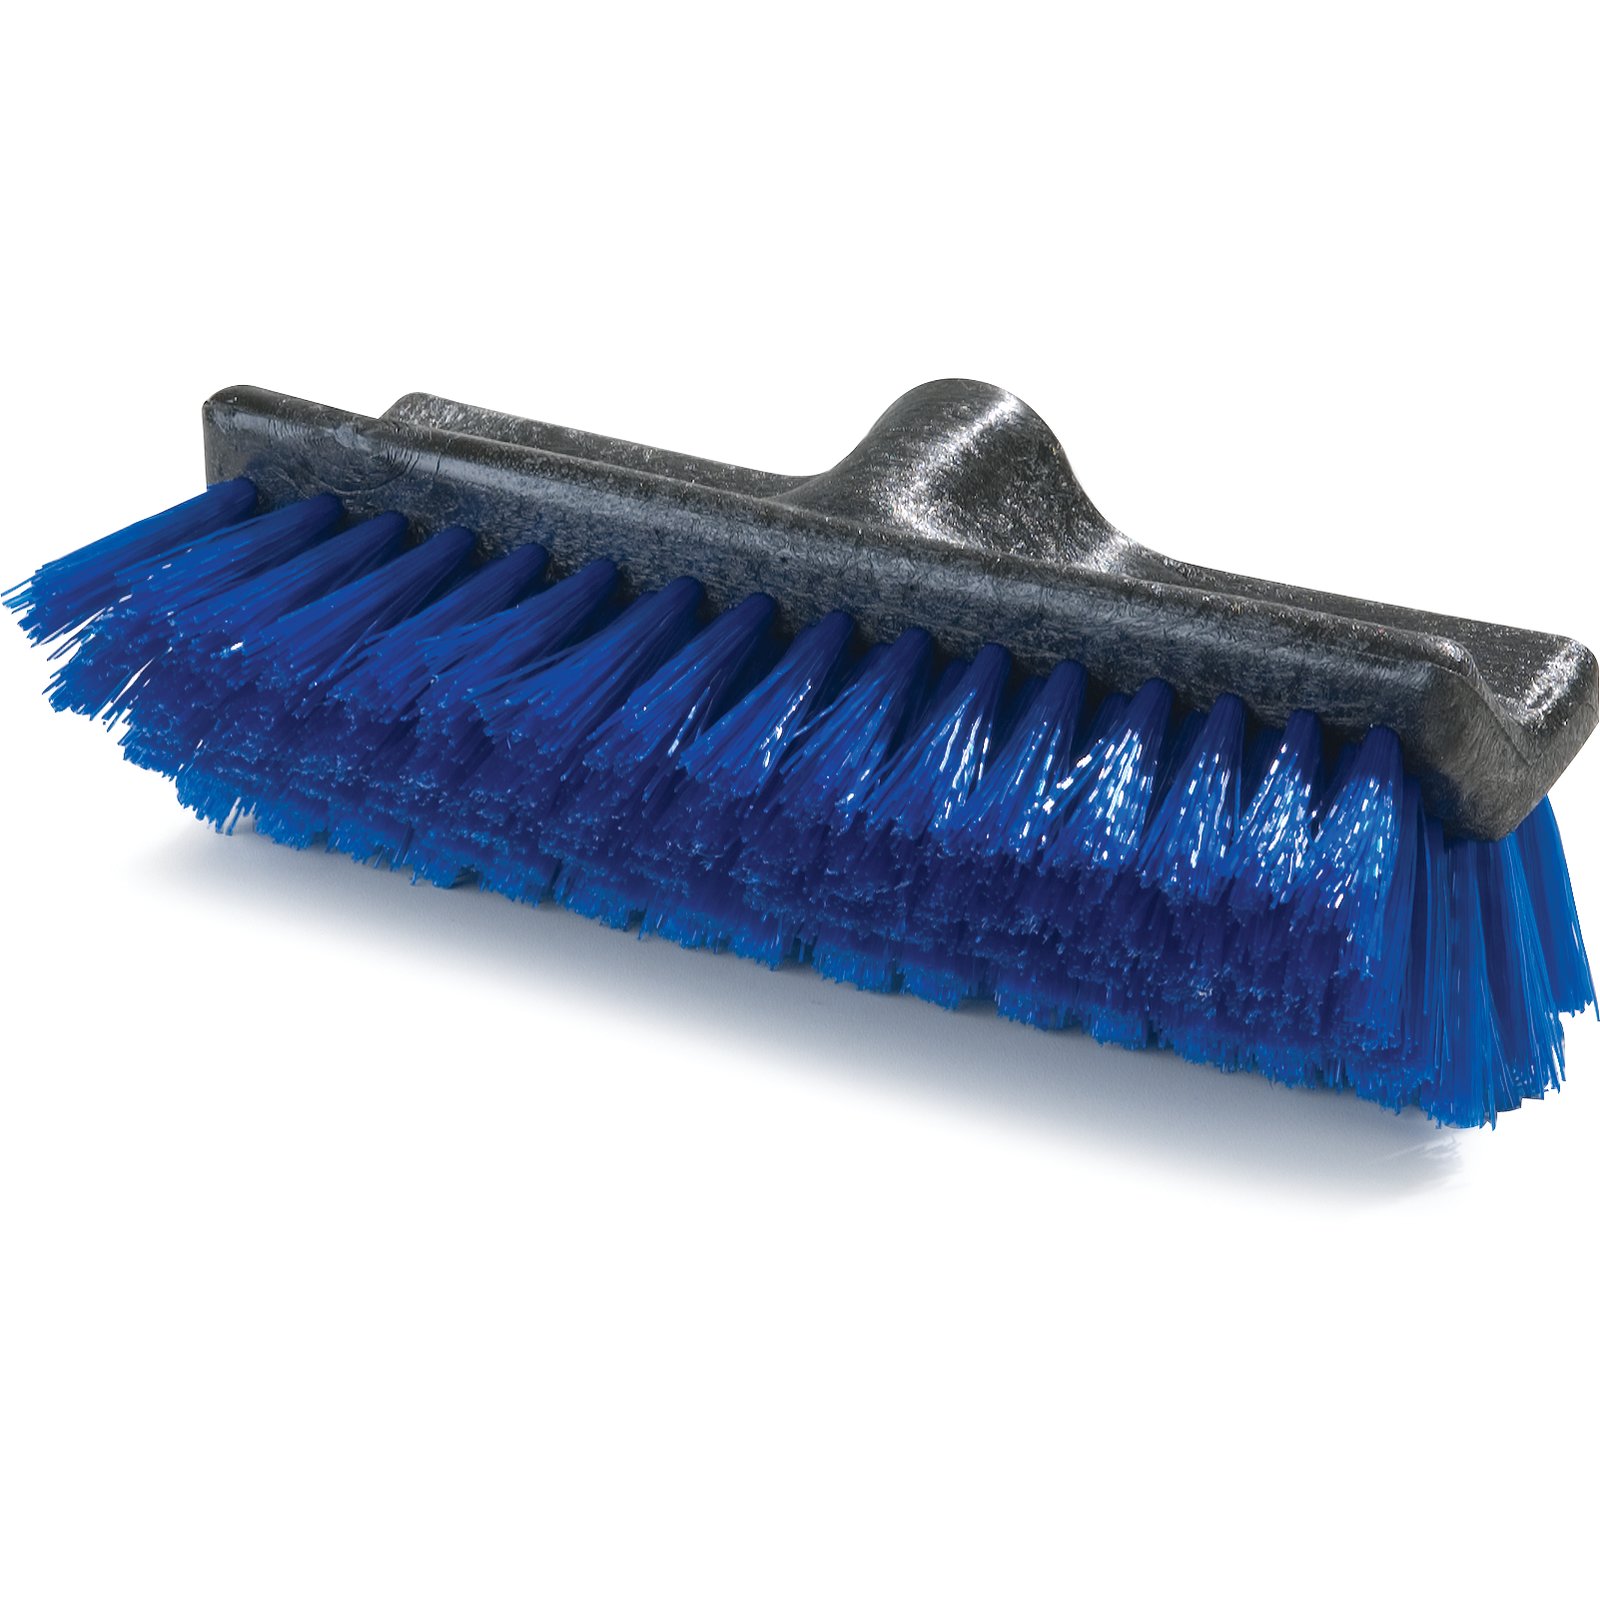 HWH Deep Clean Crevice Scrub Brush Set (2-Pack)